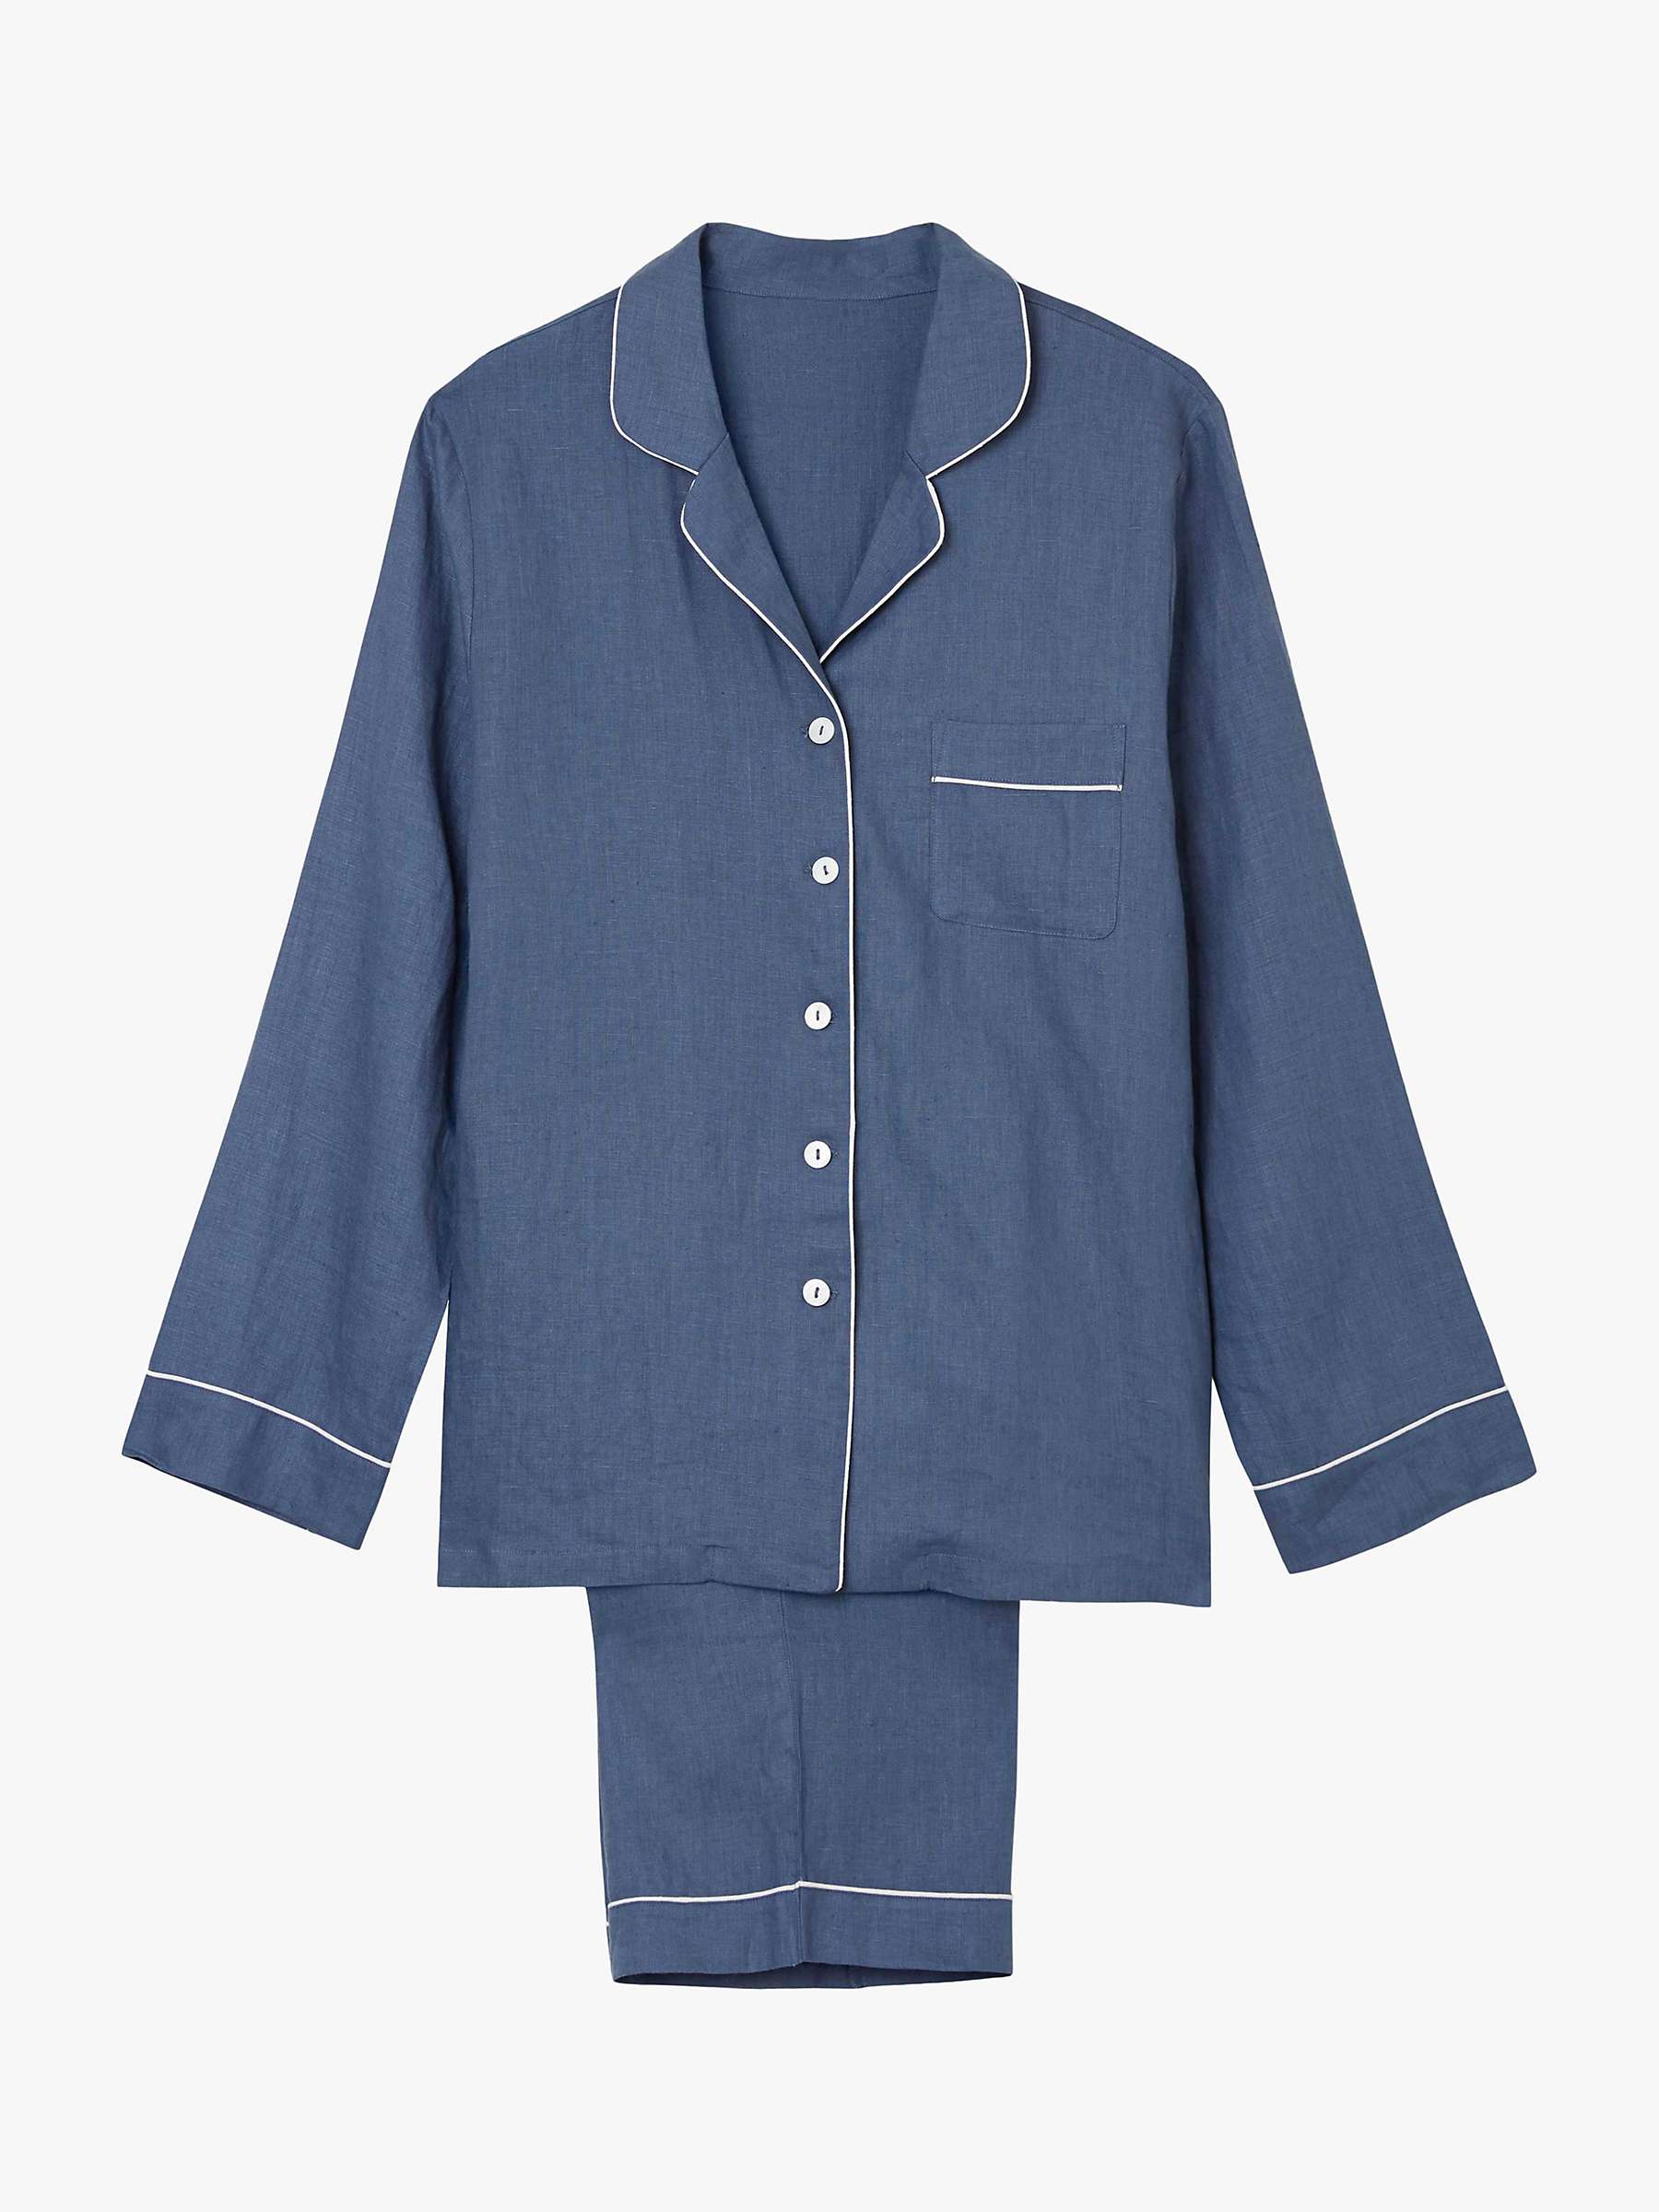 Buy Piglet in Bed Linen Shirt & Trouser Pyjama Set Online at johnlewis.com